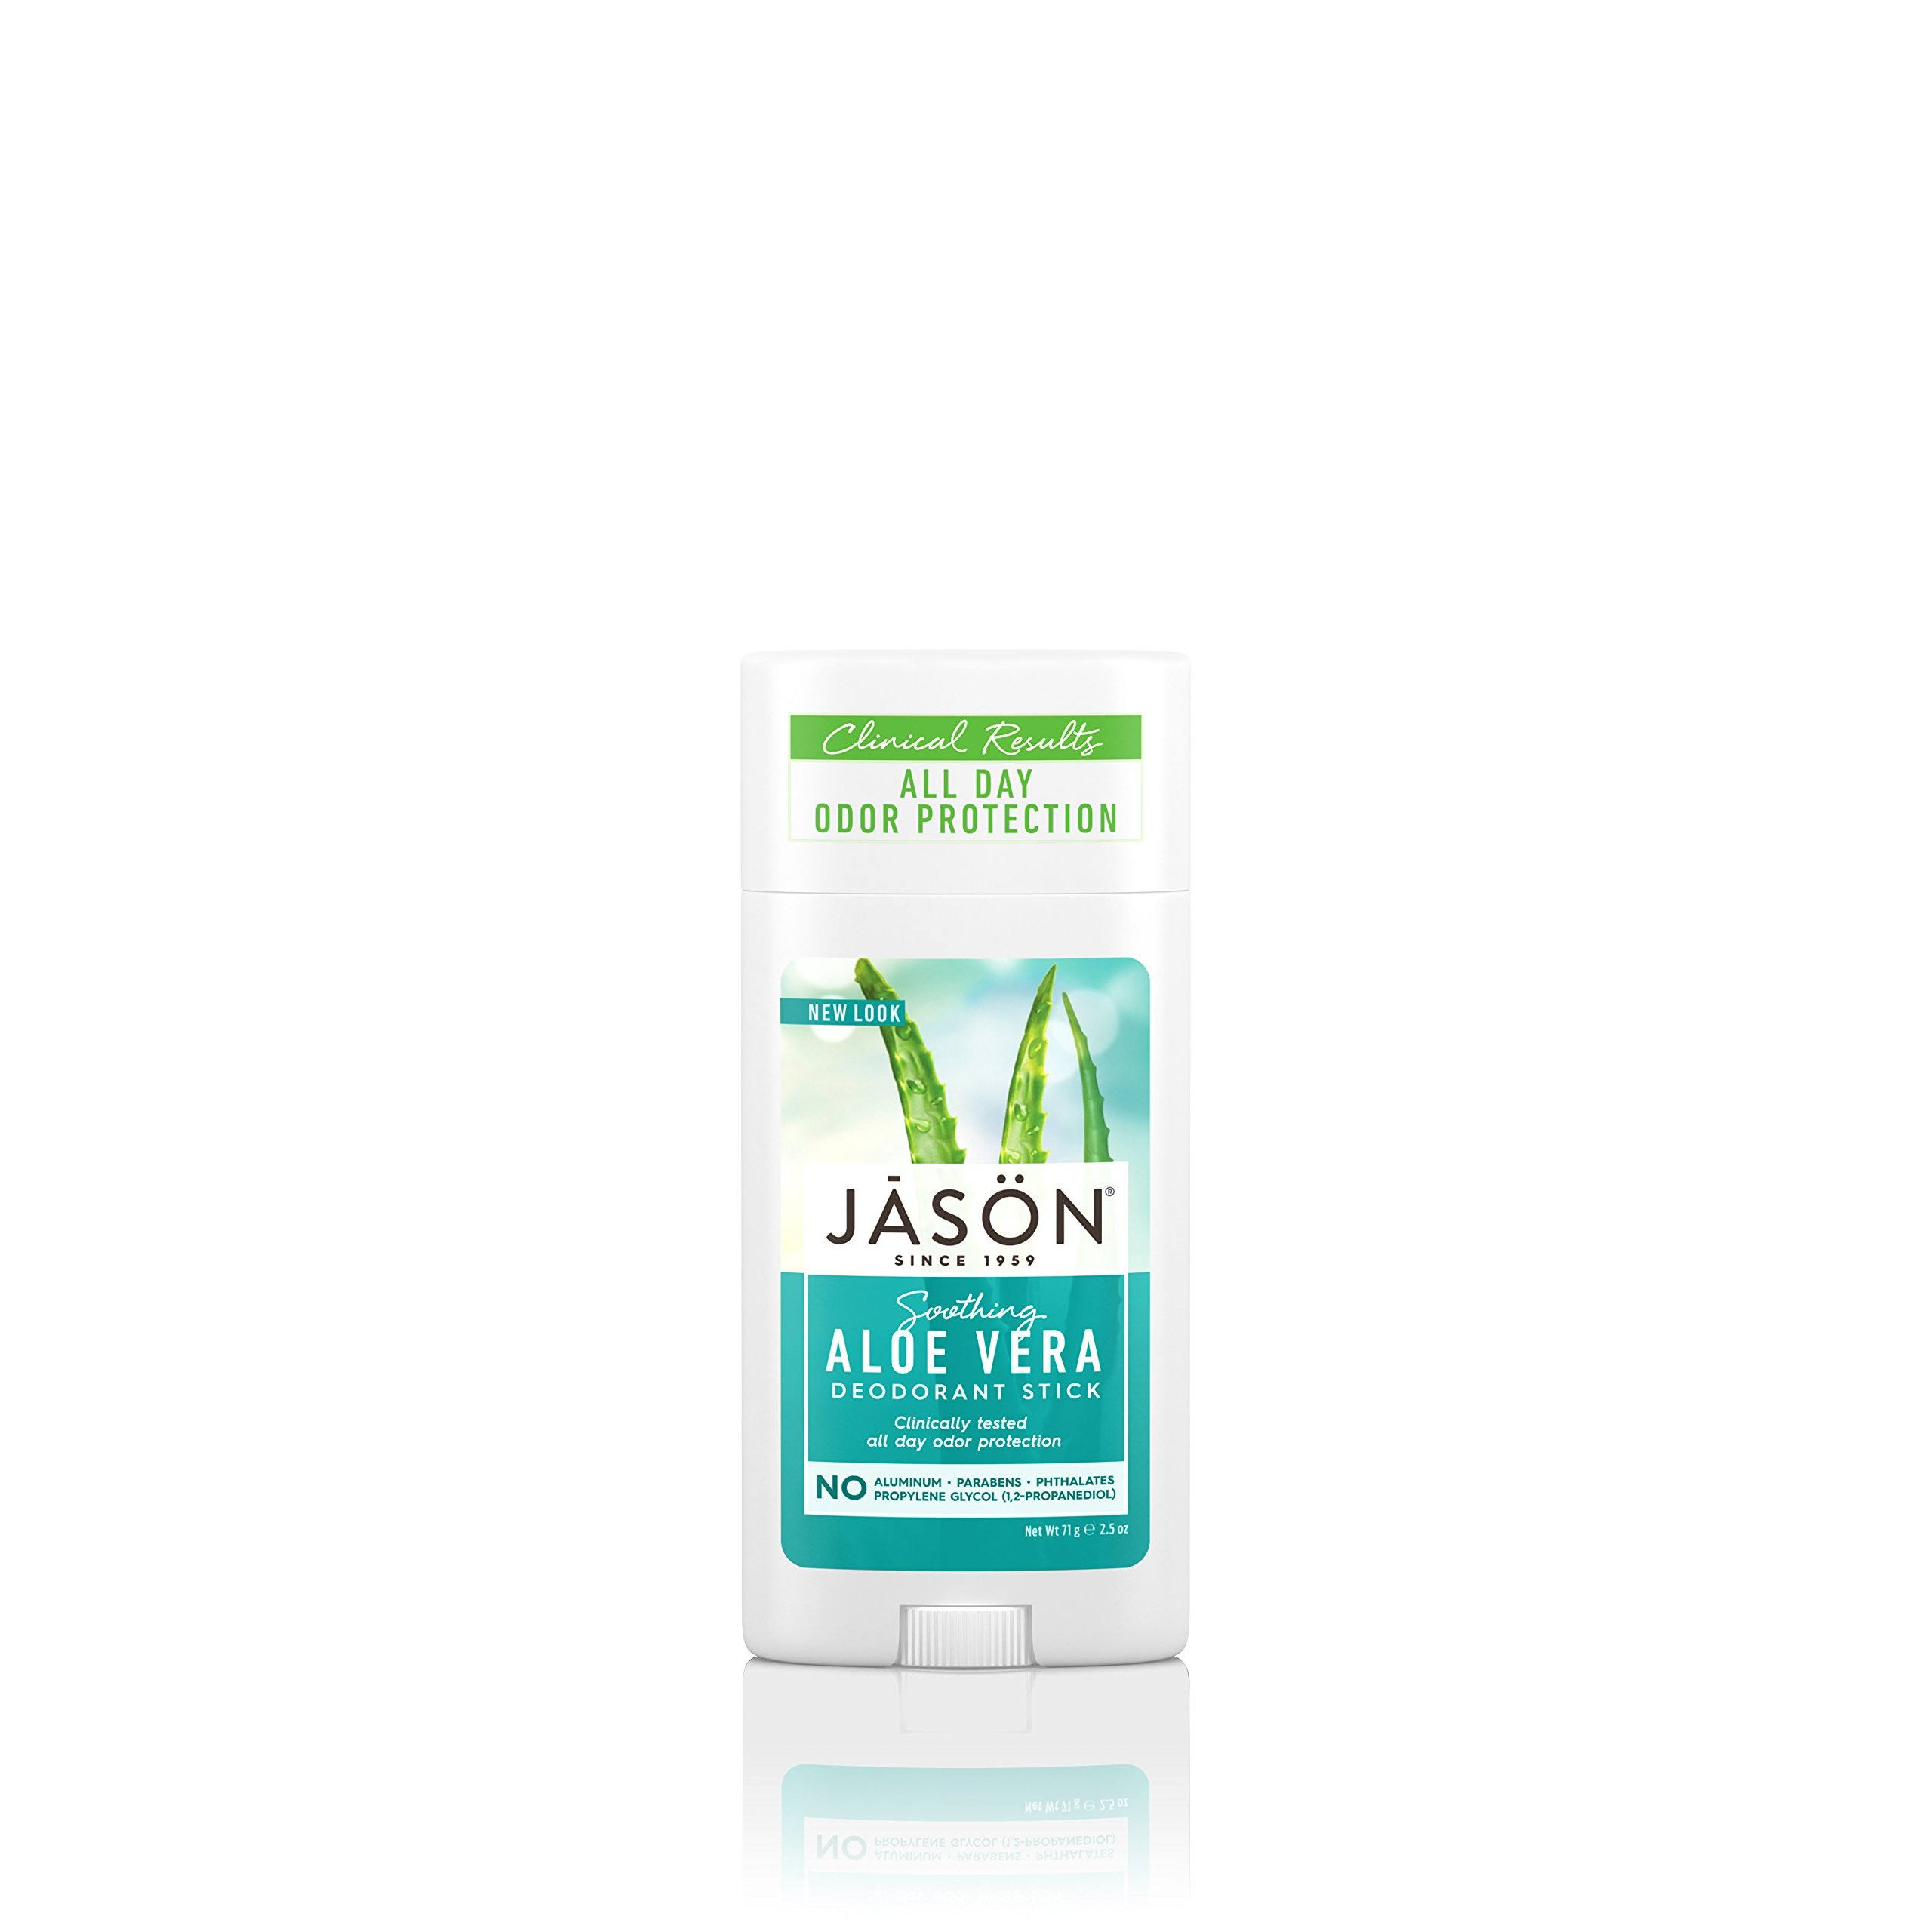 Jason Pure Natural Deodorant Stick - Soothing Aloe Vera